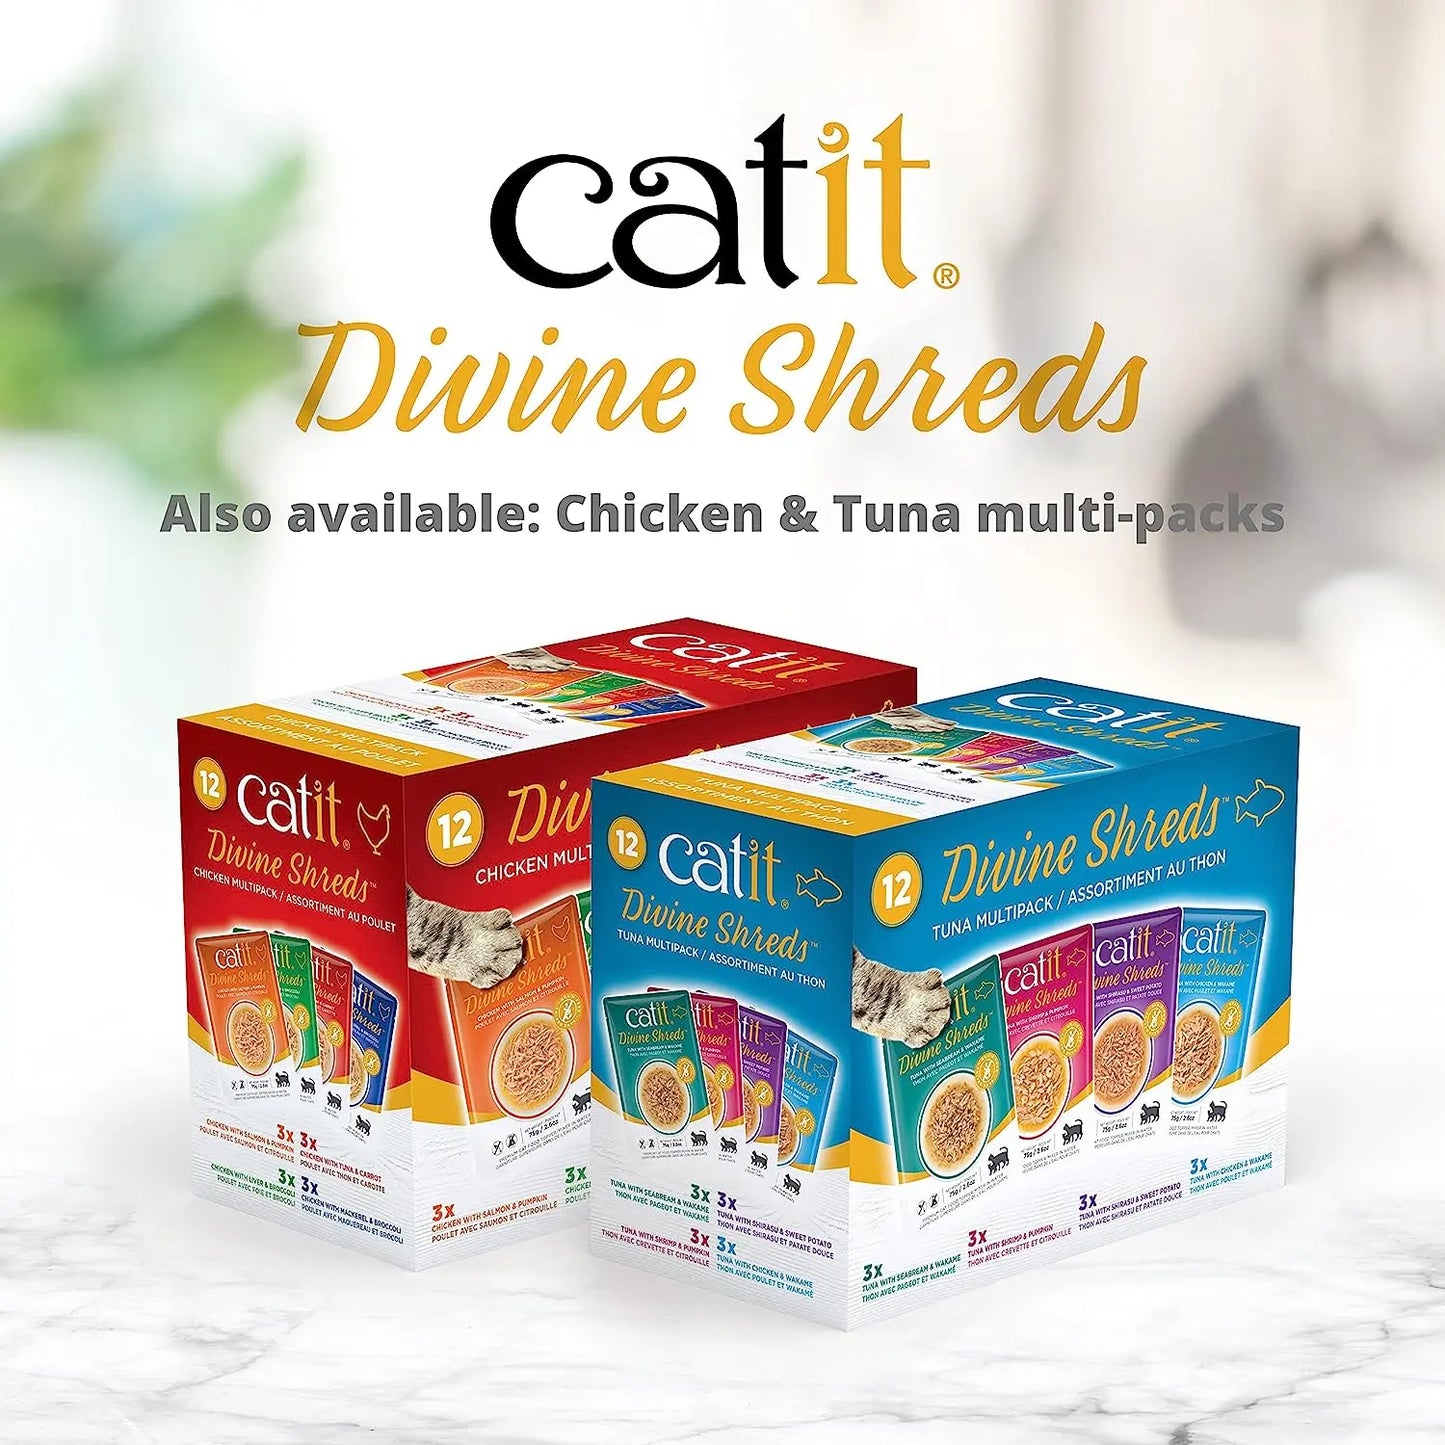 Catit Divine Shreds Chicken with Salmon and Pumpkin CatIt